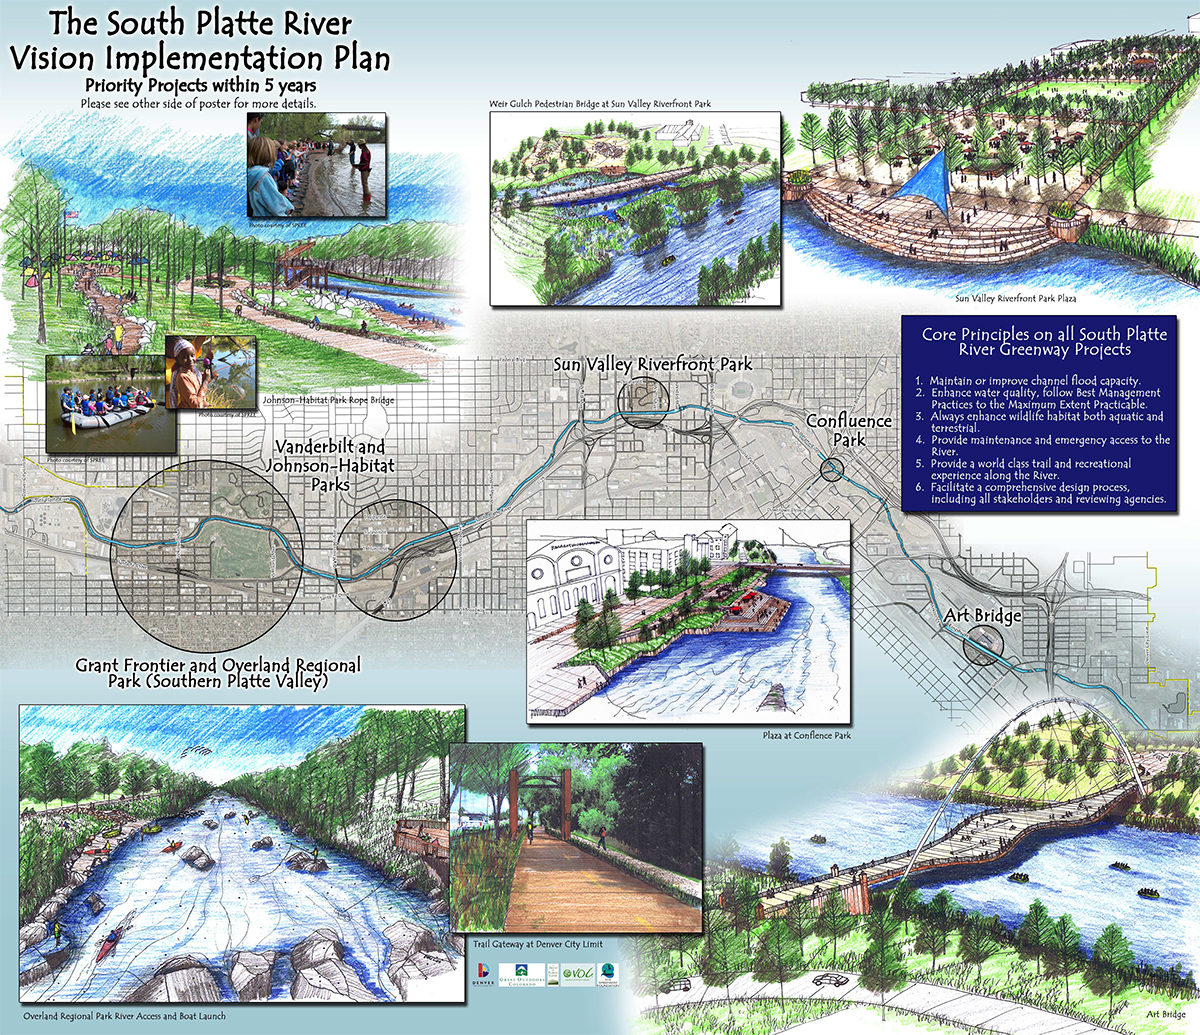 River Vision Implementation Plan